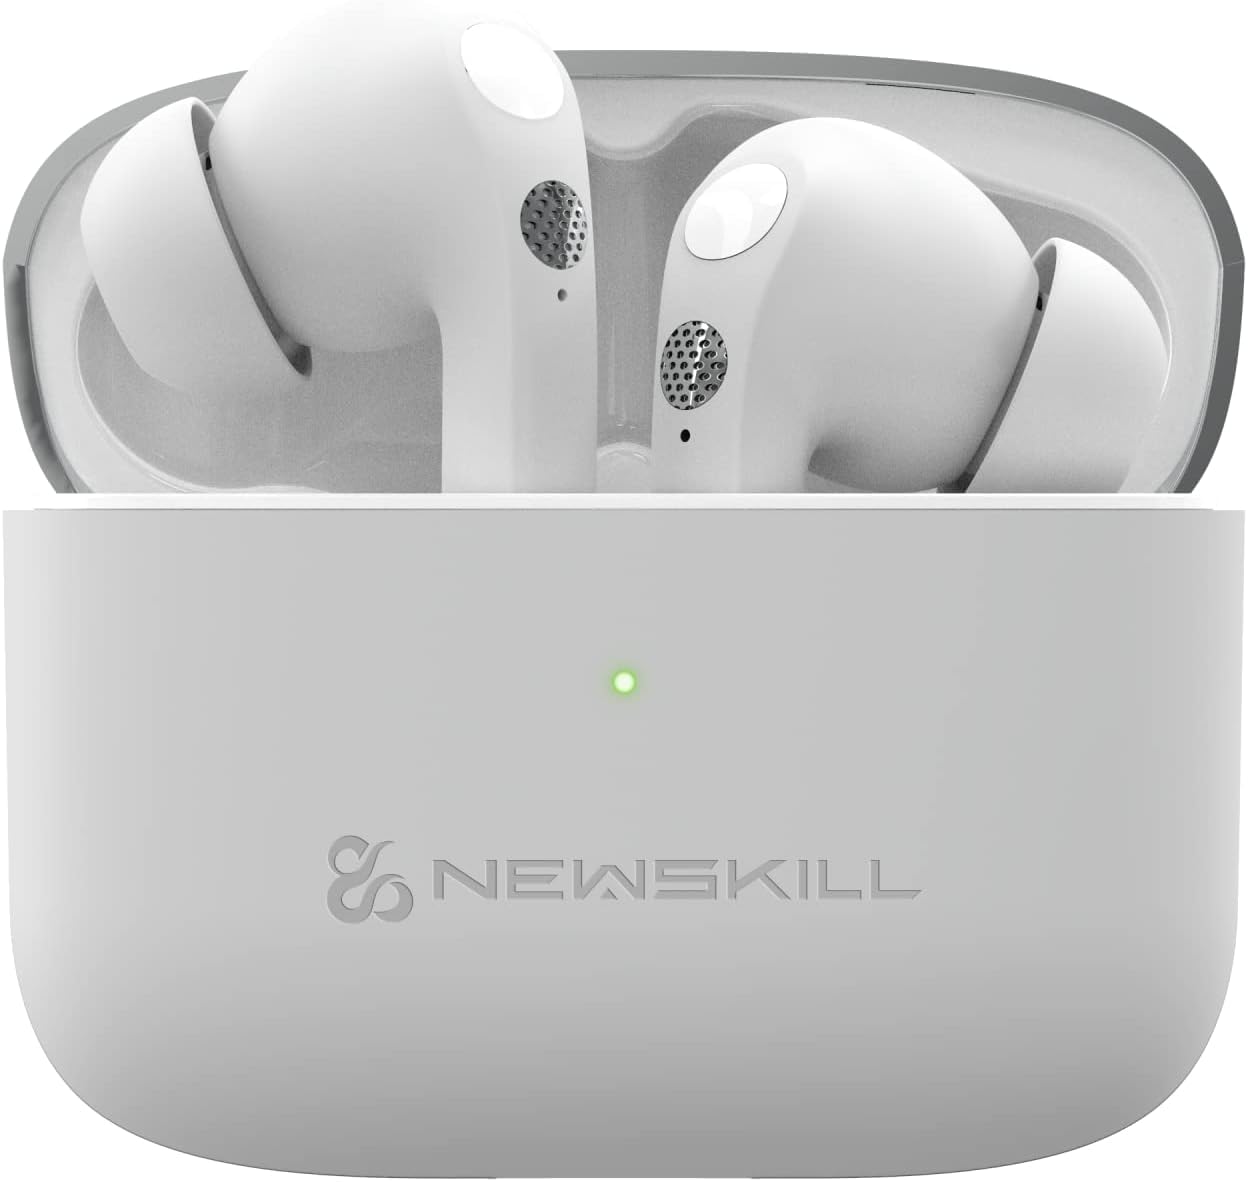 NEWSKILL Anuki Bluetooth 5.0 Wireless Headset, Touch Control, Geräuschunterdrückung, Mikrofon, IPX4 resistent, 16 Stunden Wiedergabe, Wireless Earbuds USB-C Charging, Weiß